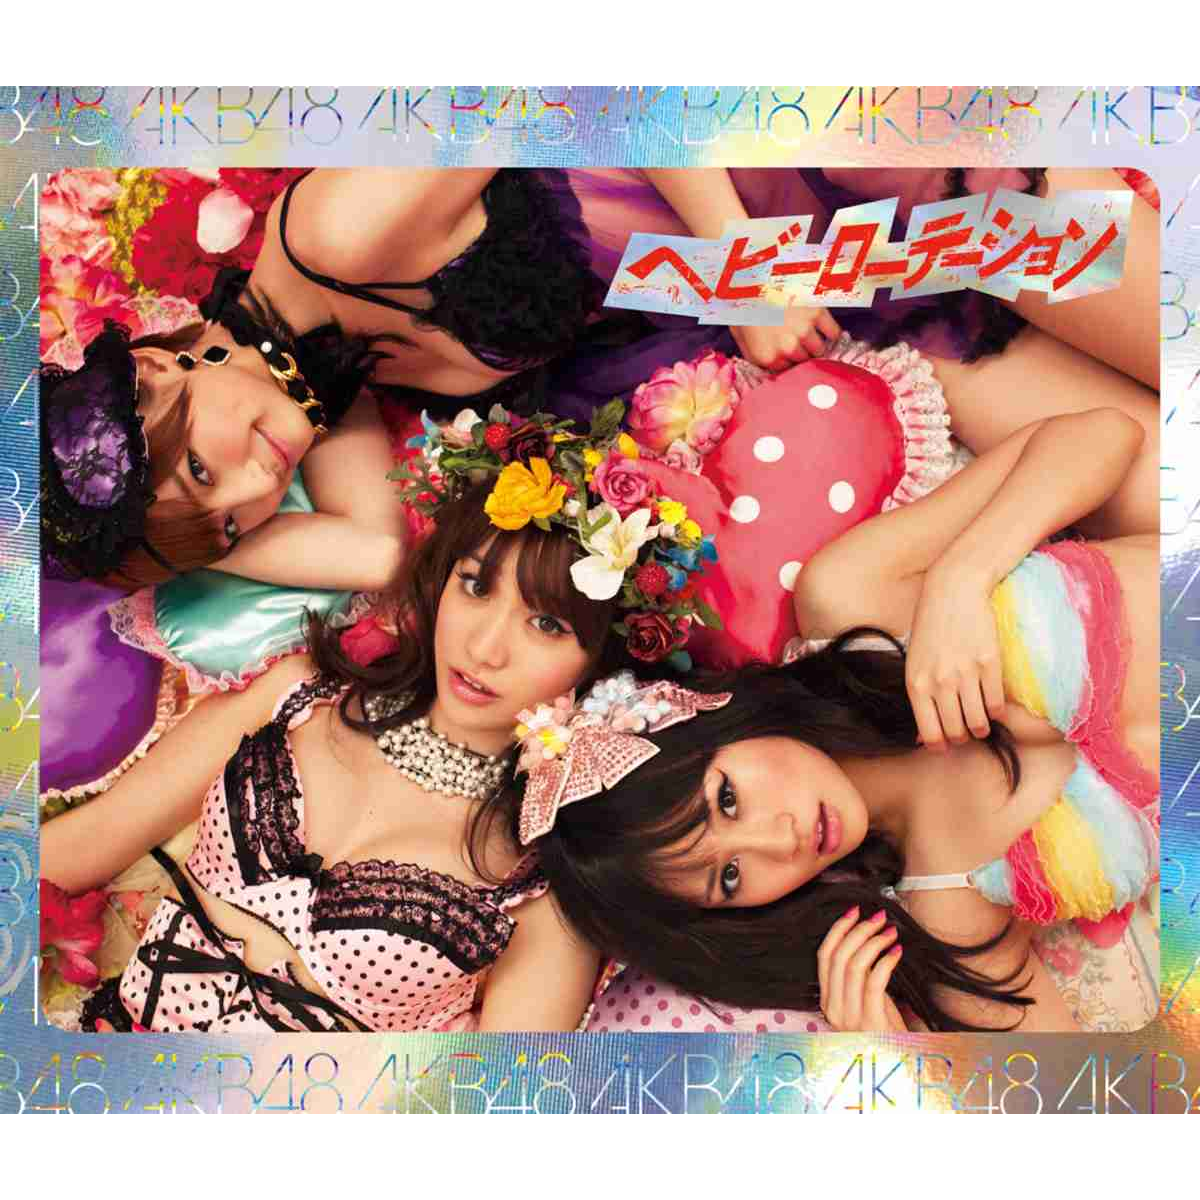 AKB48 — Heavy Rotation cover artwork